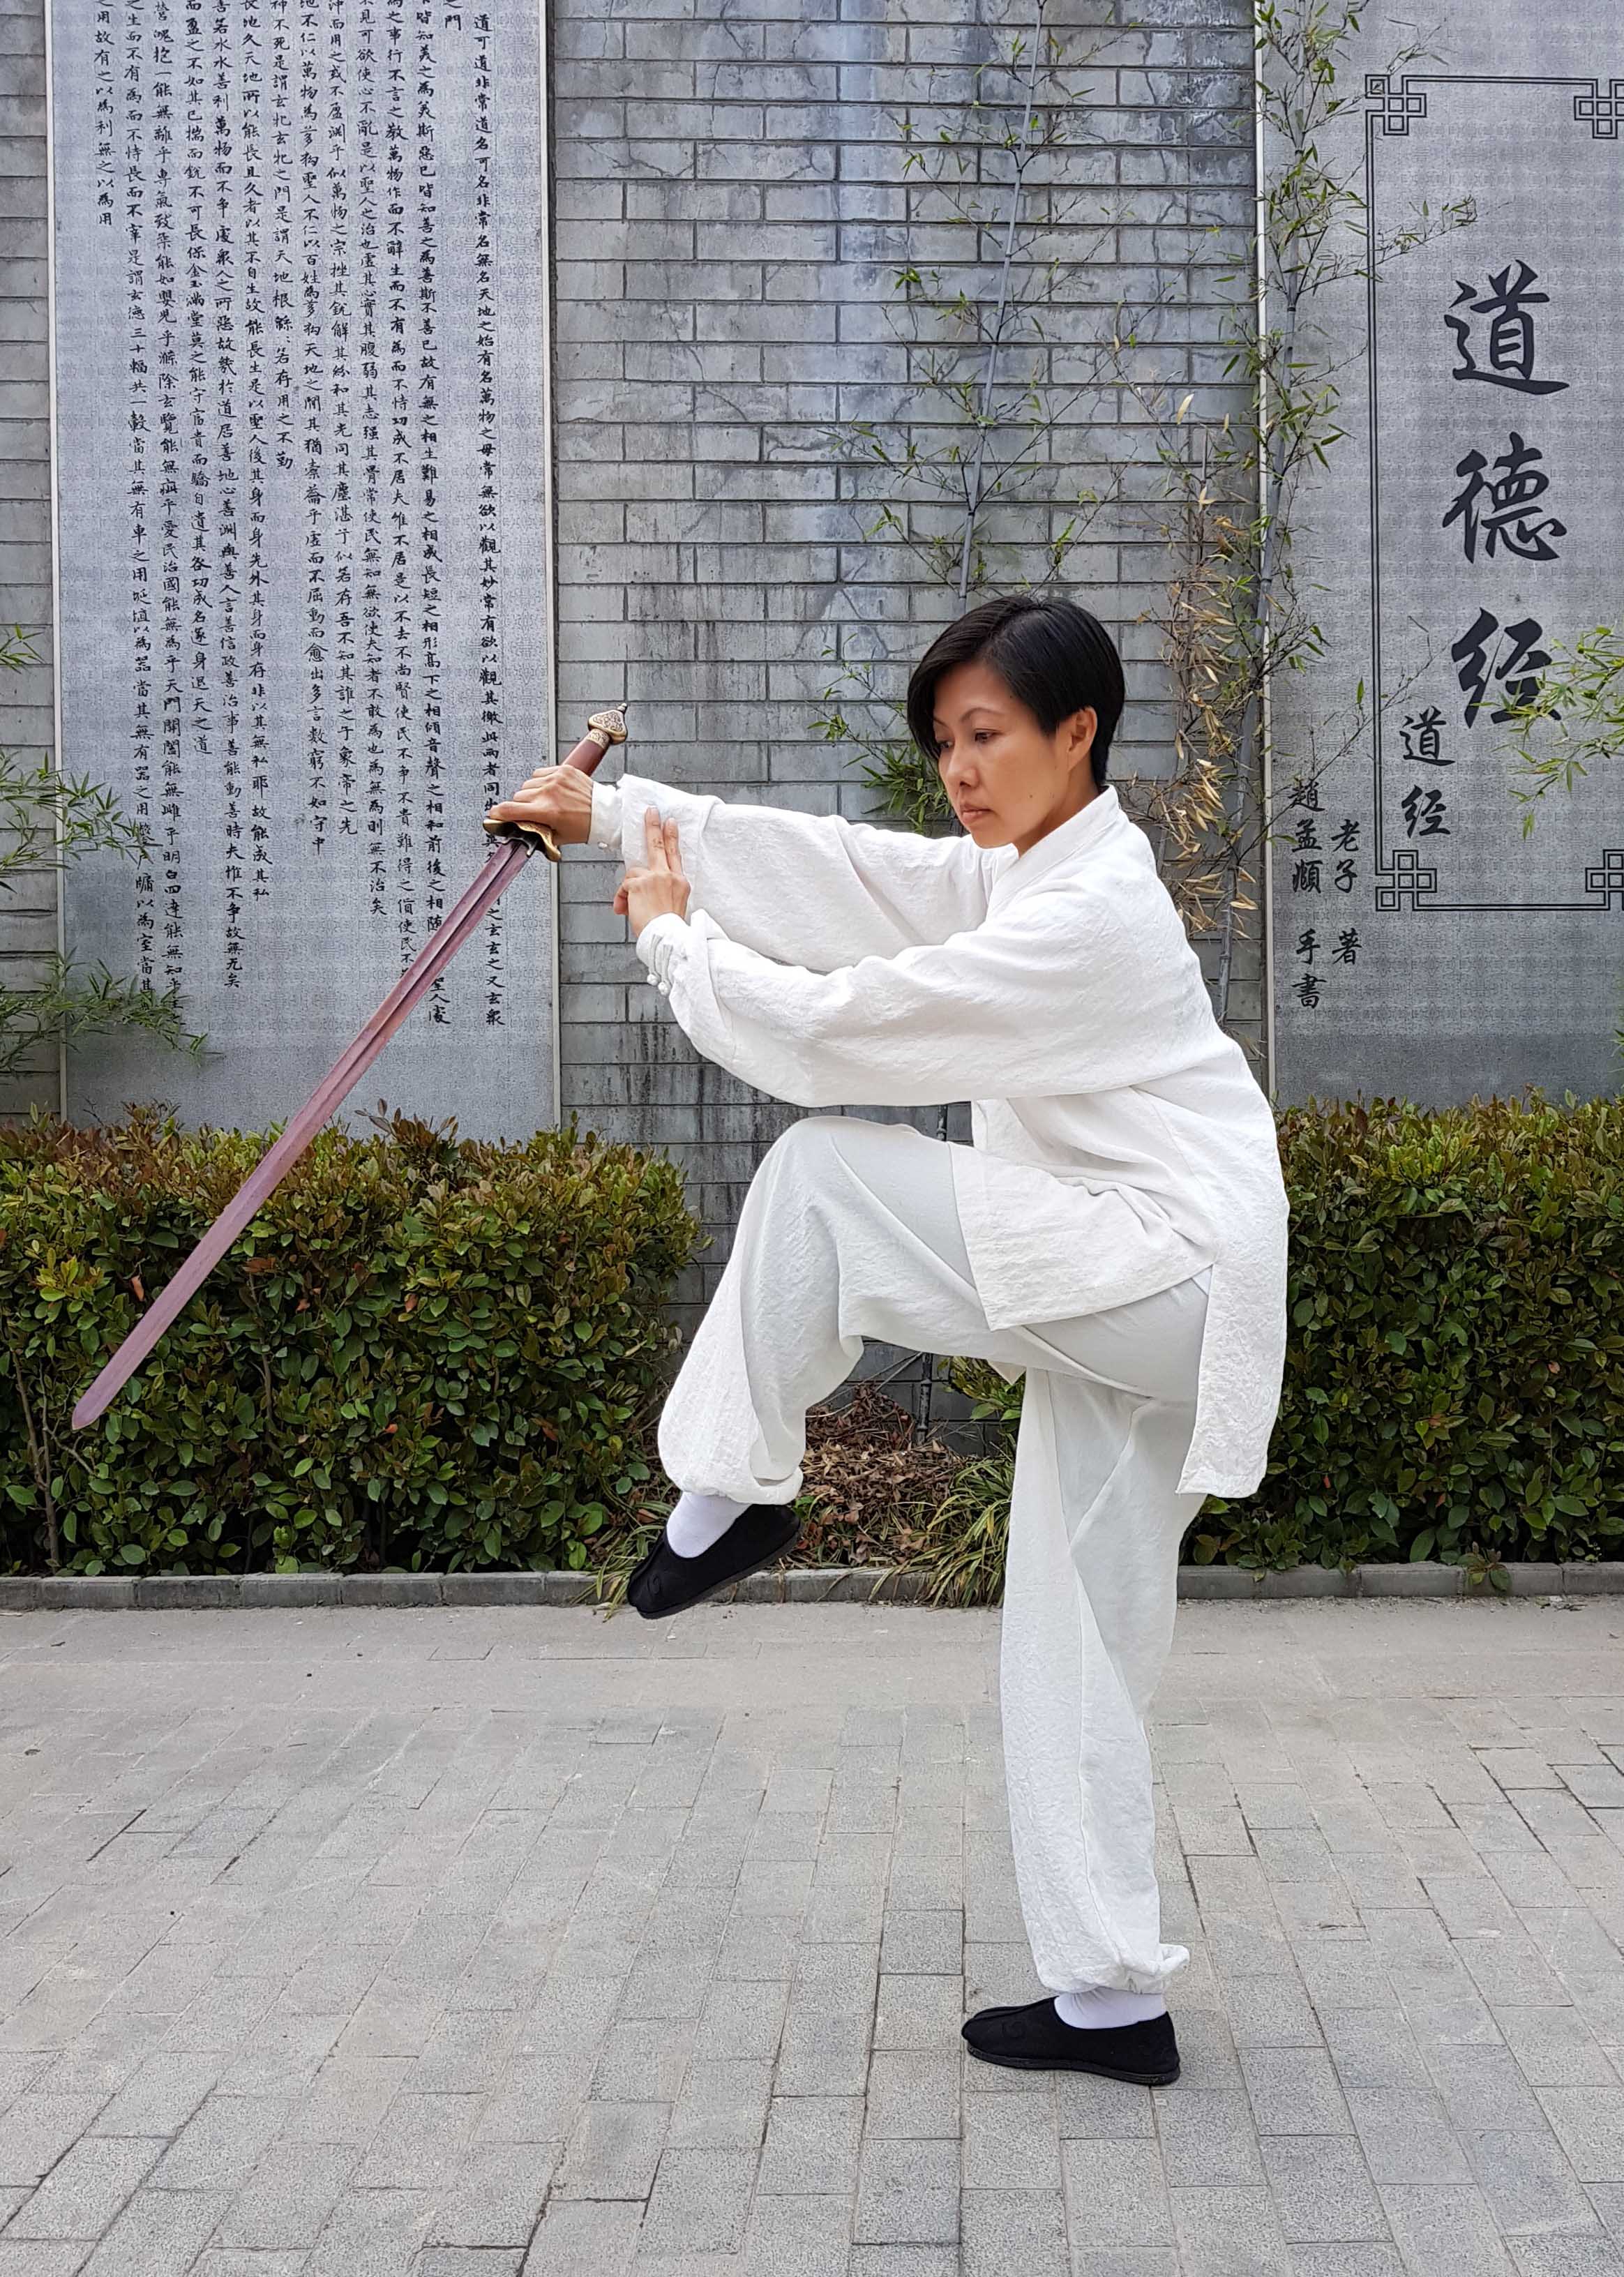 Wudang Taichi Sword